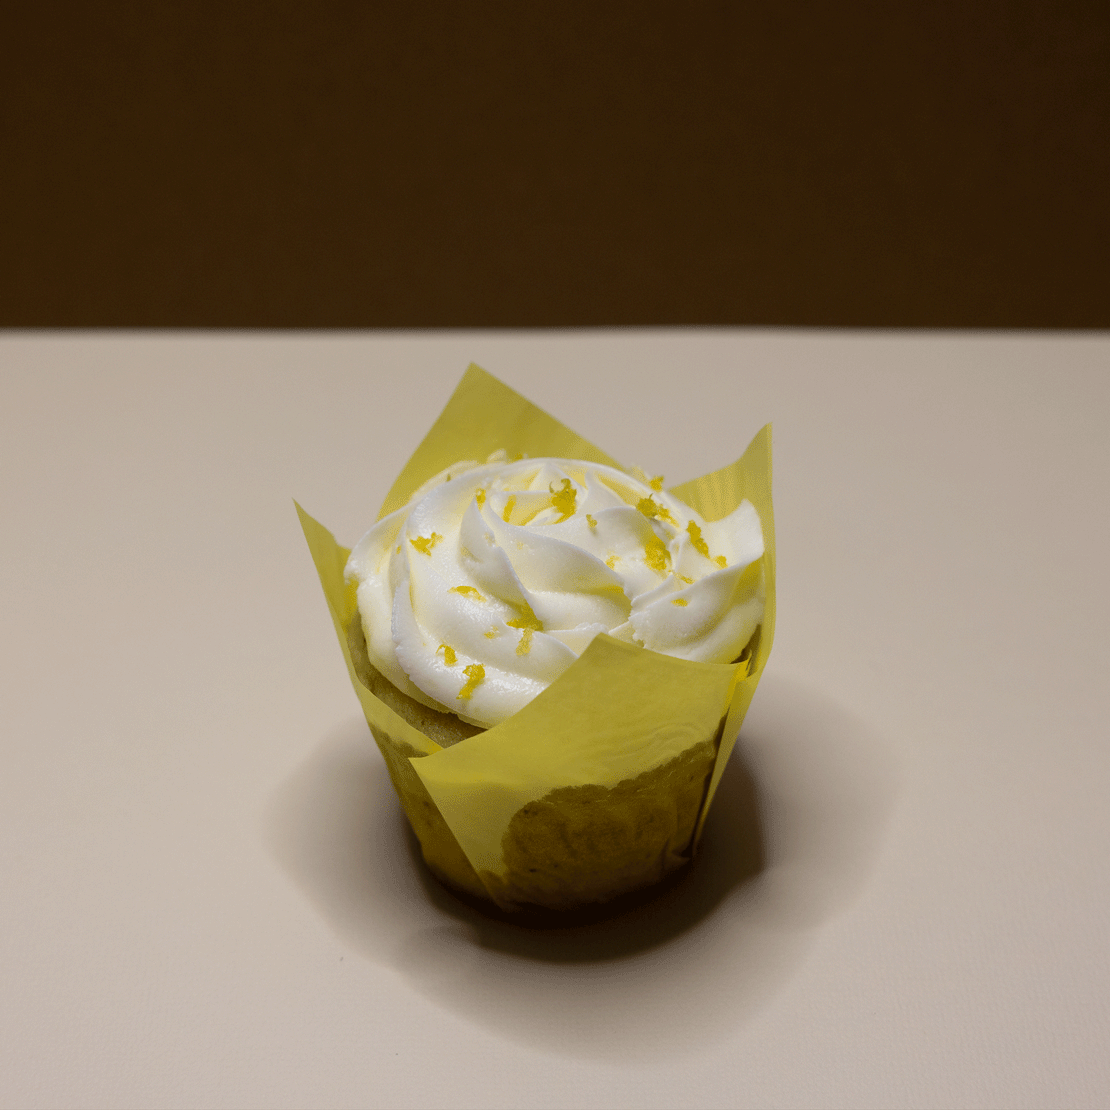 Lemon and poppyseed cupcake